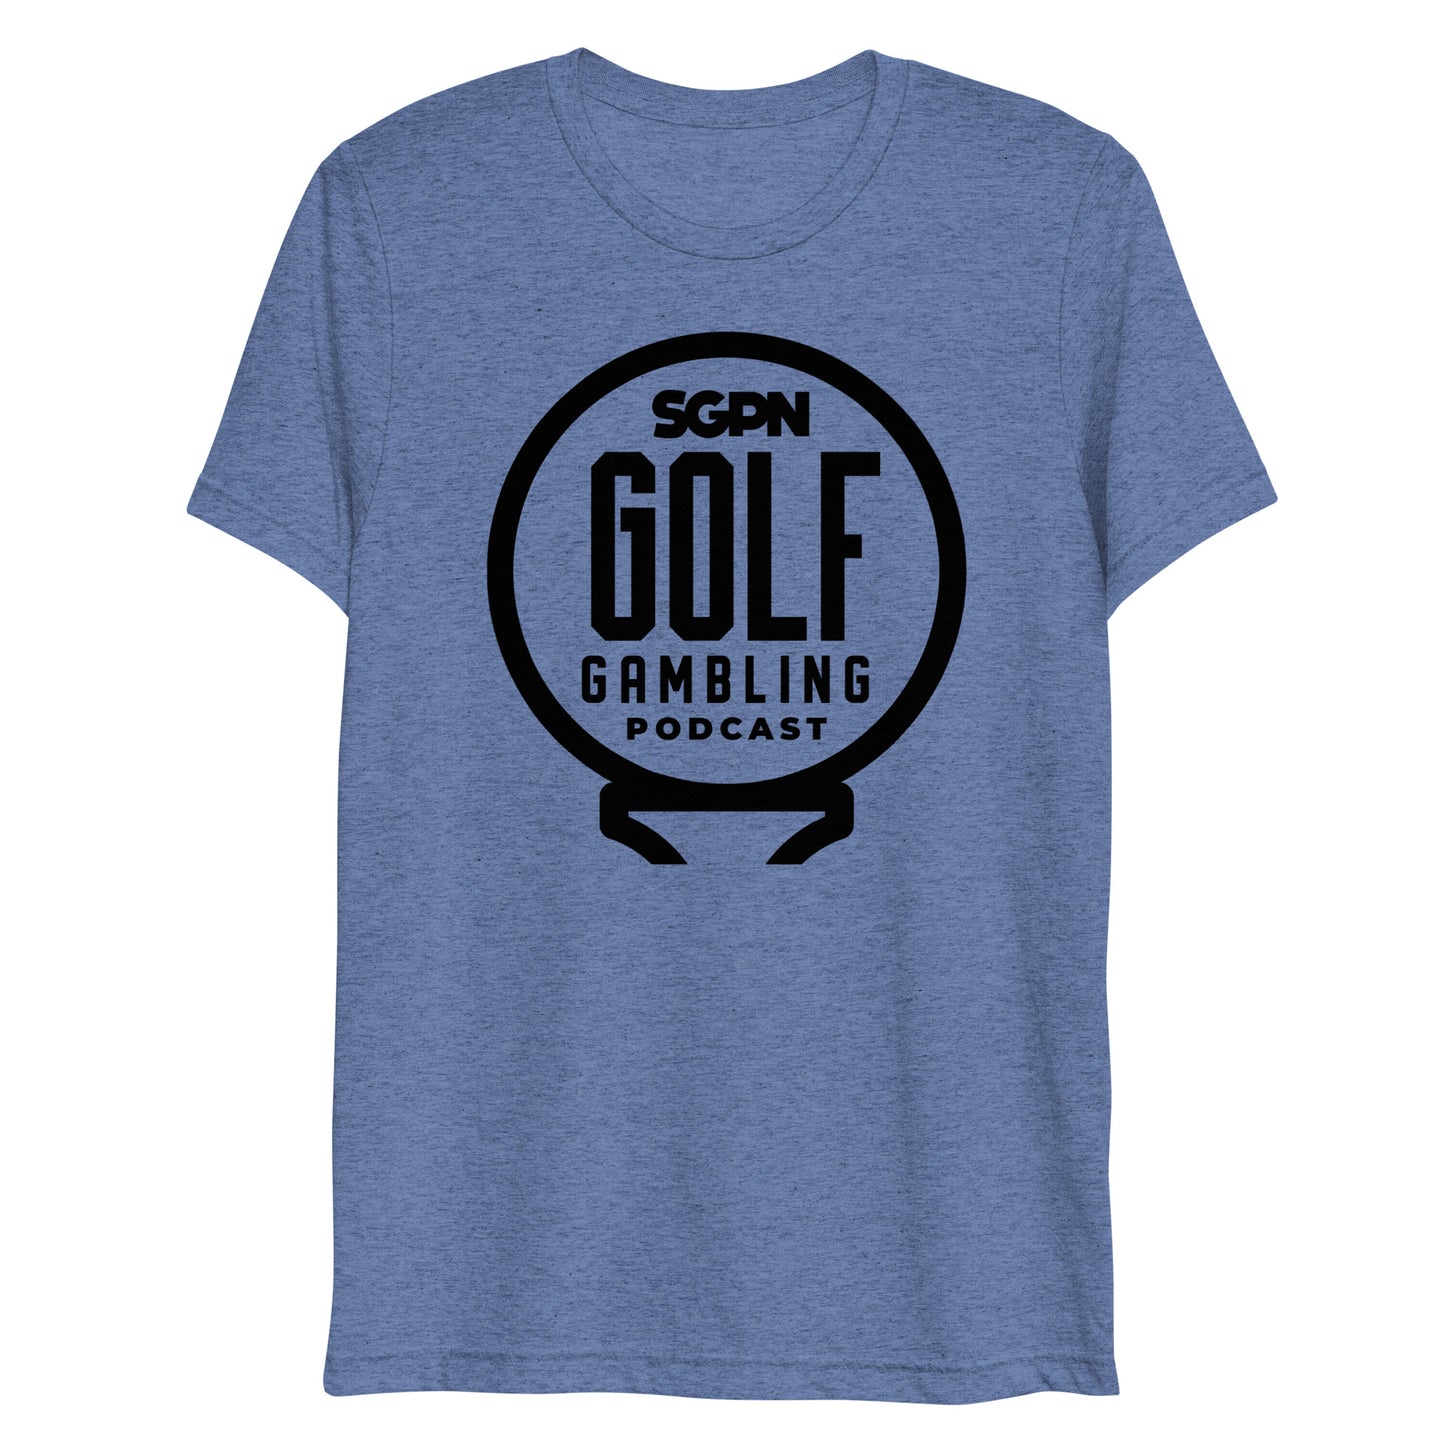 Golf Gambling Podcast Short sleeve t-shirt (Black Logo)